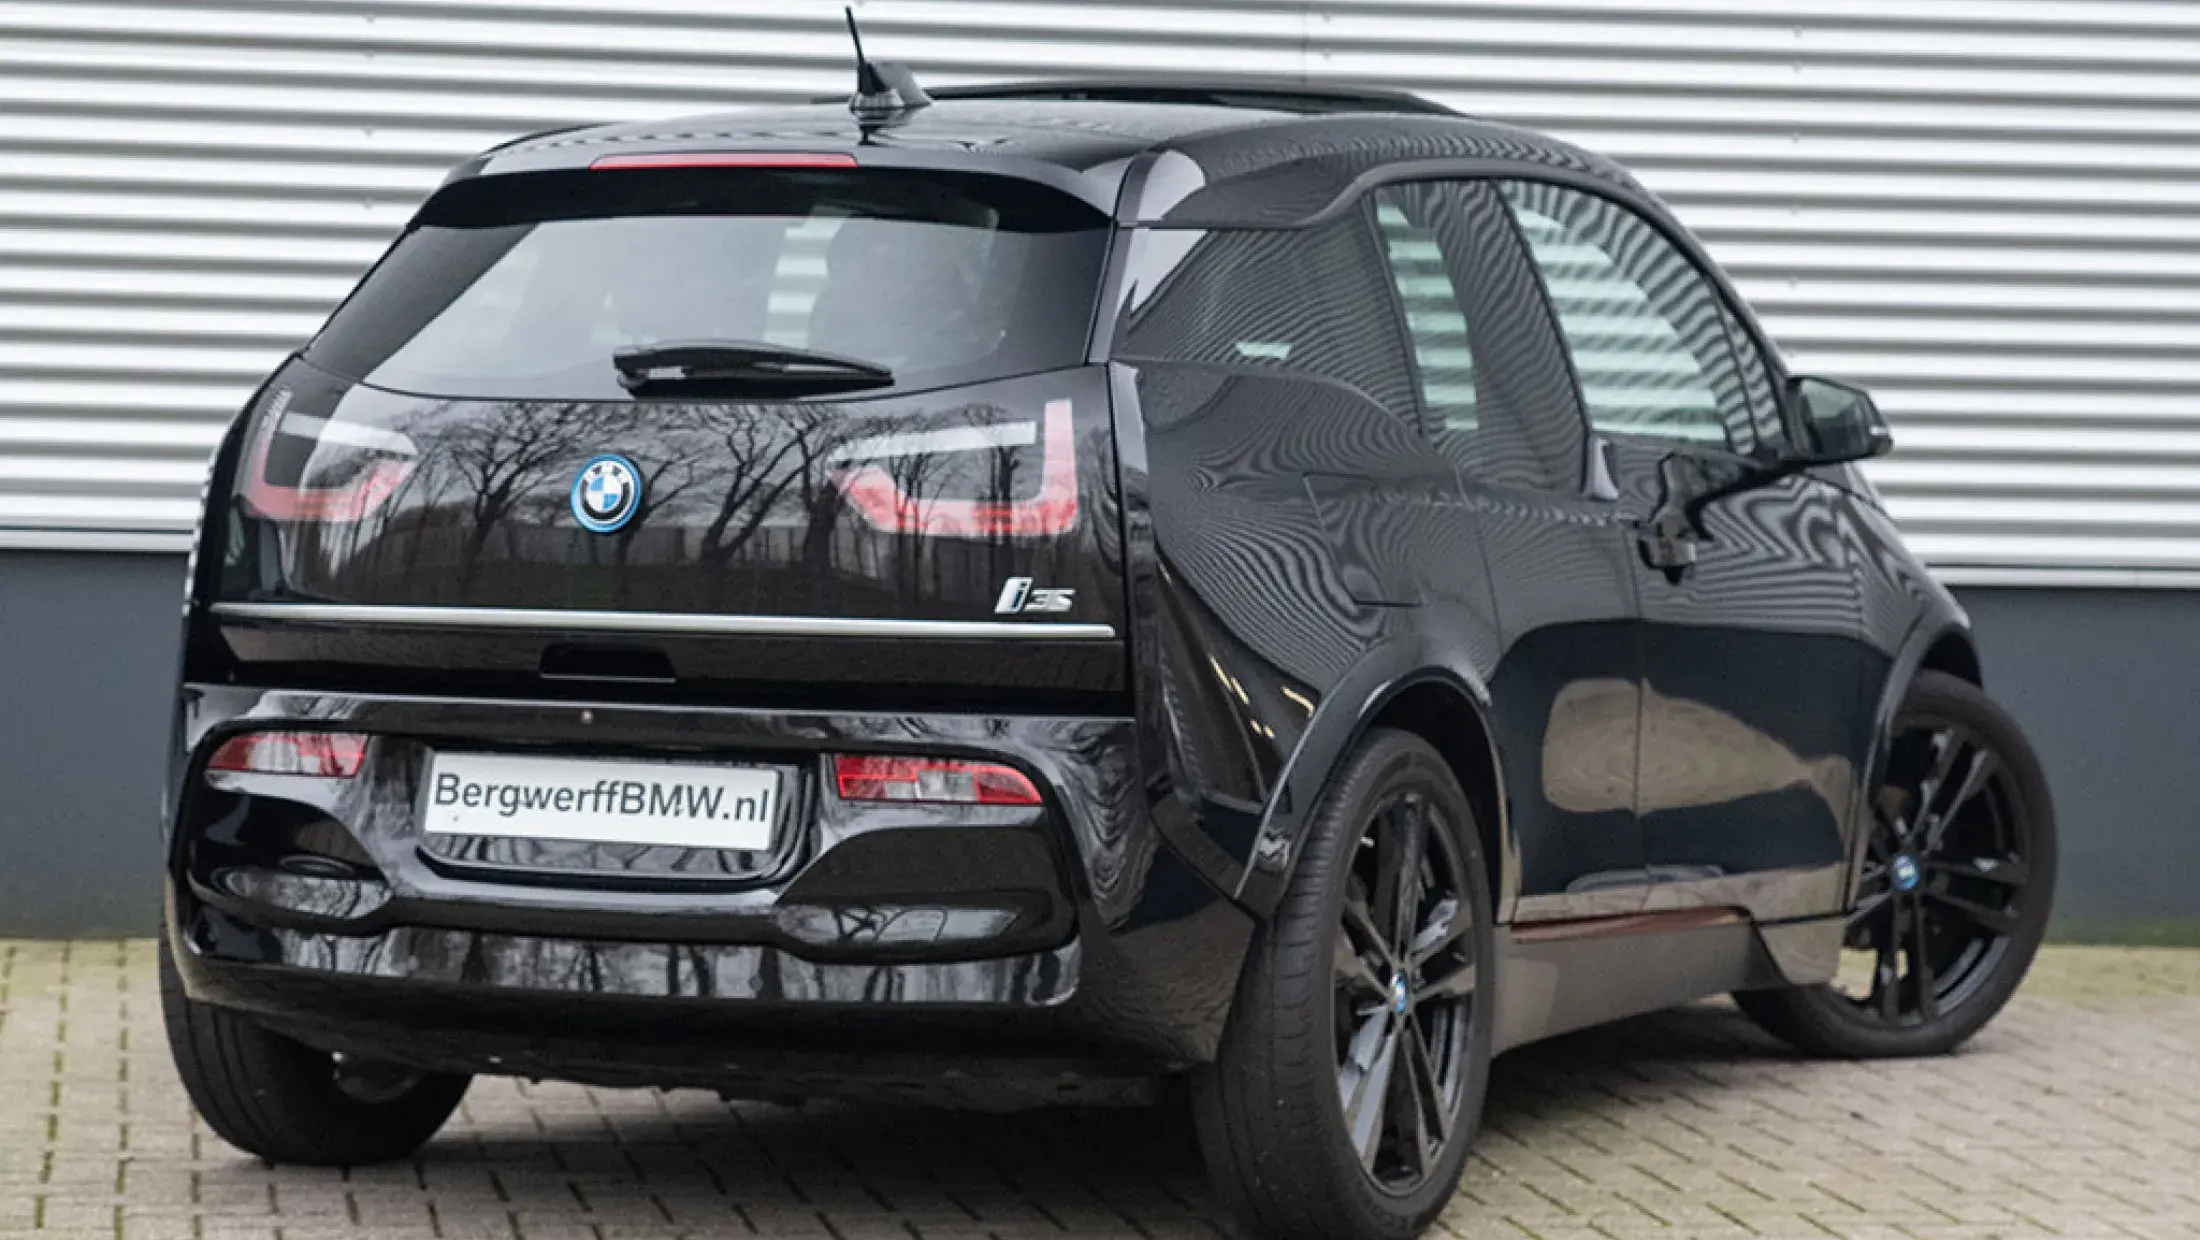 BMW i3 electric 120Ah roadstyle Fluid Black Stellaric Dalbergiabraun 2019 bergwerff